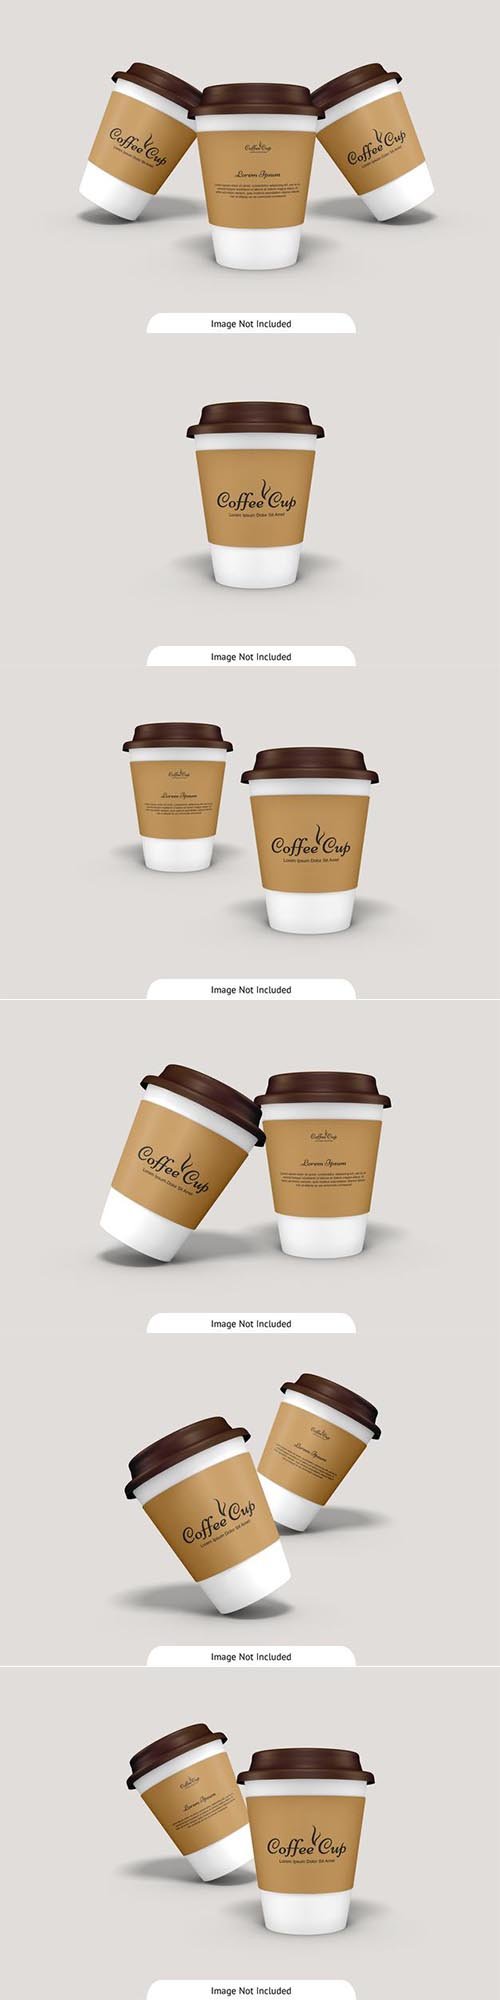 Coffee cup with cardboard mockup